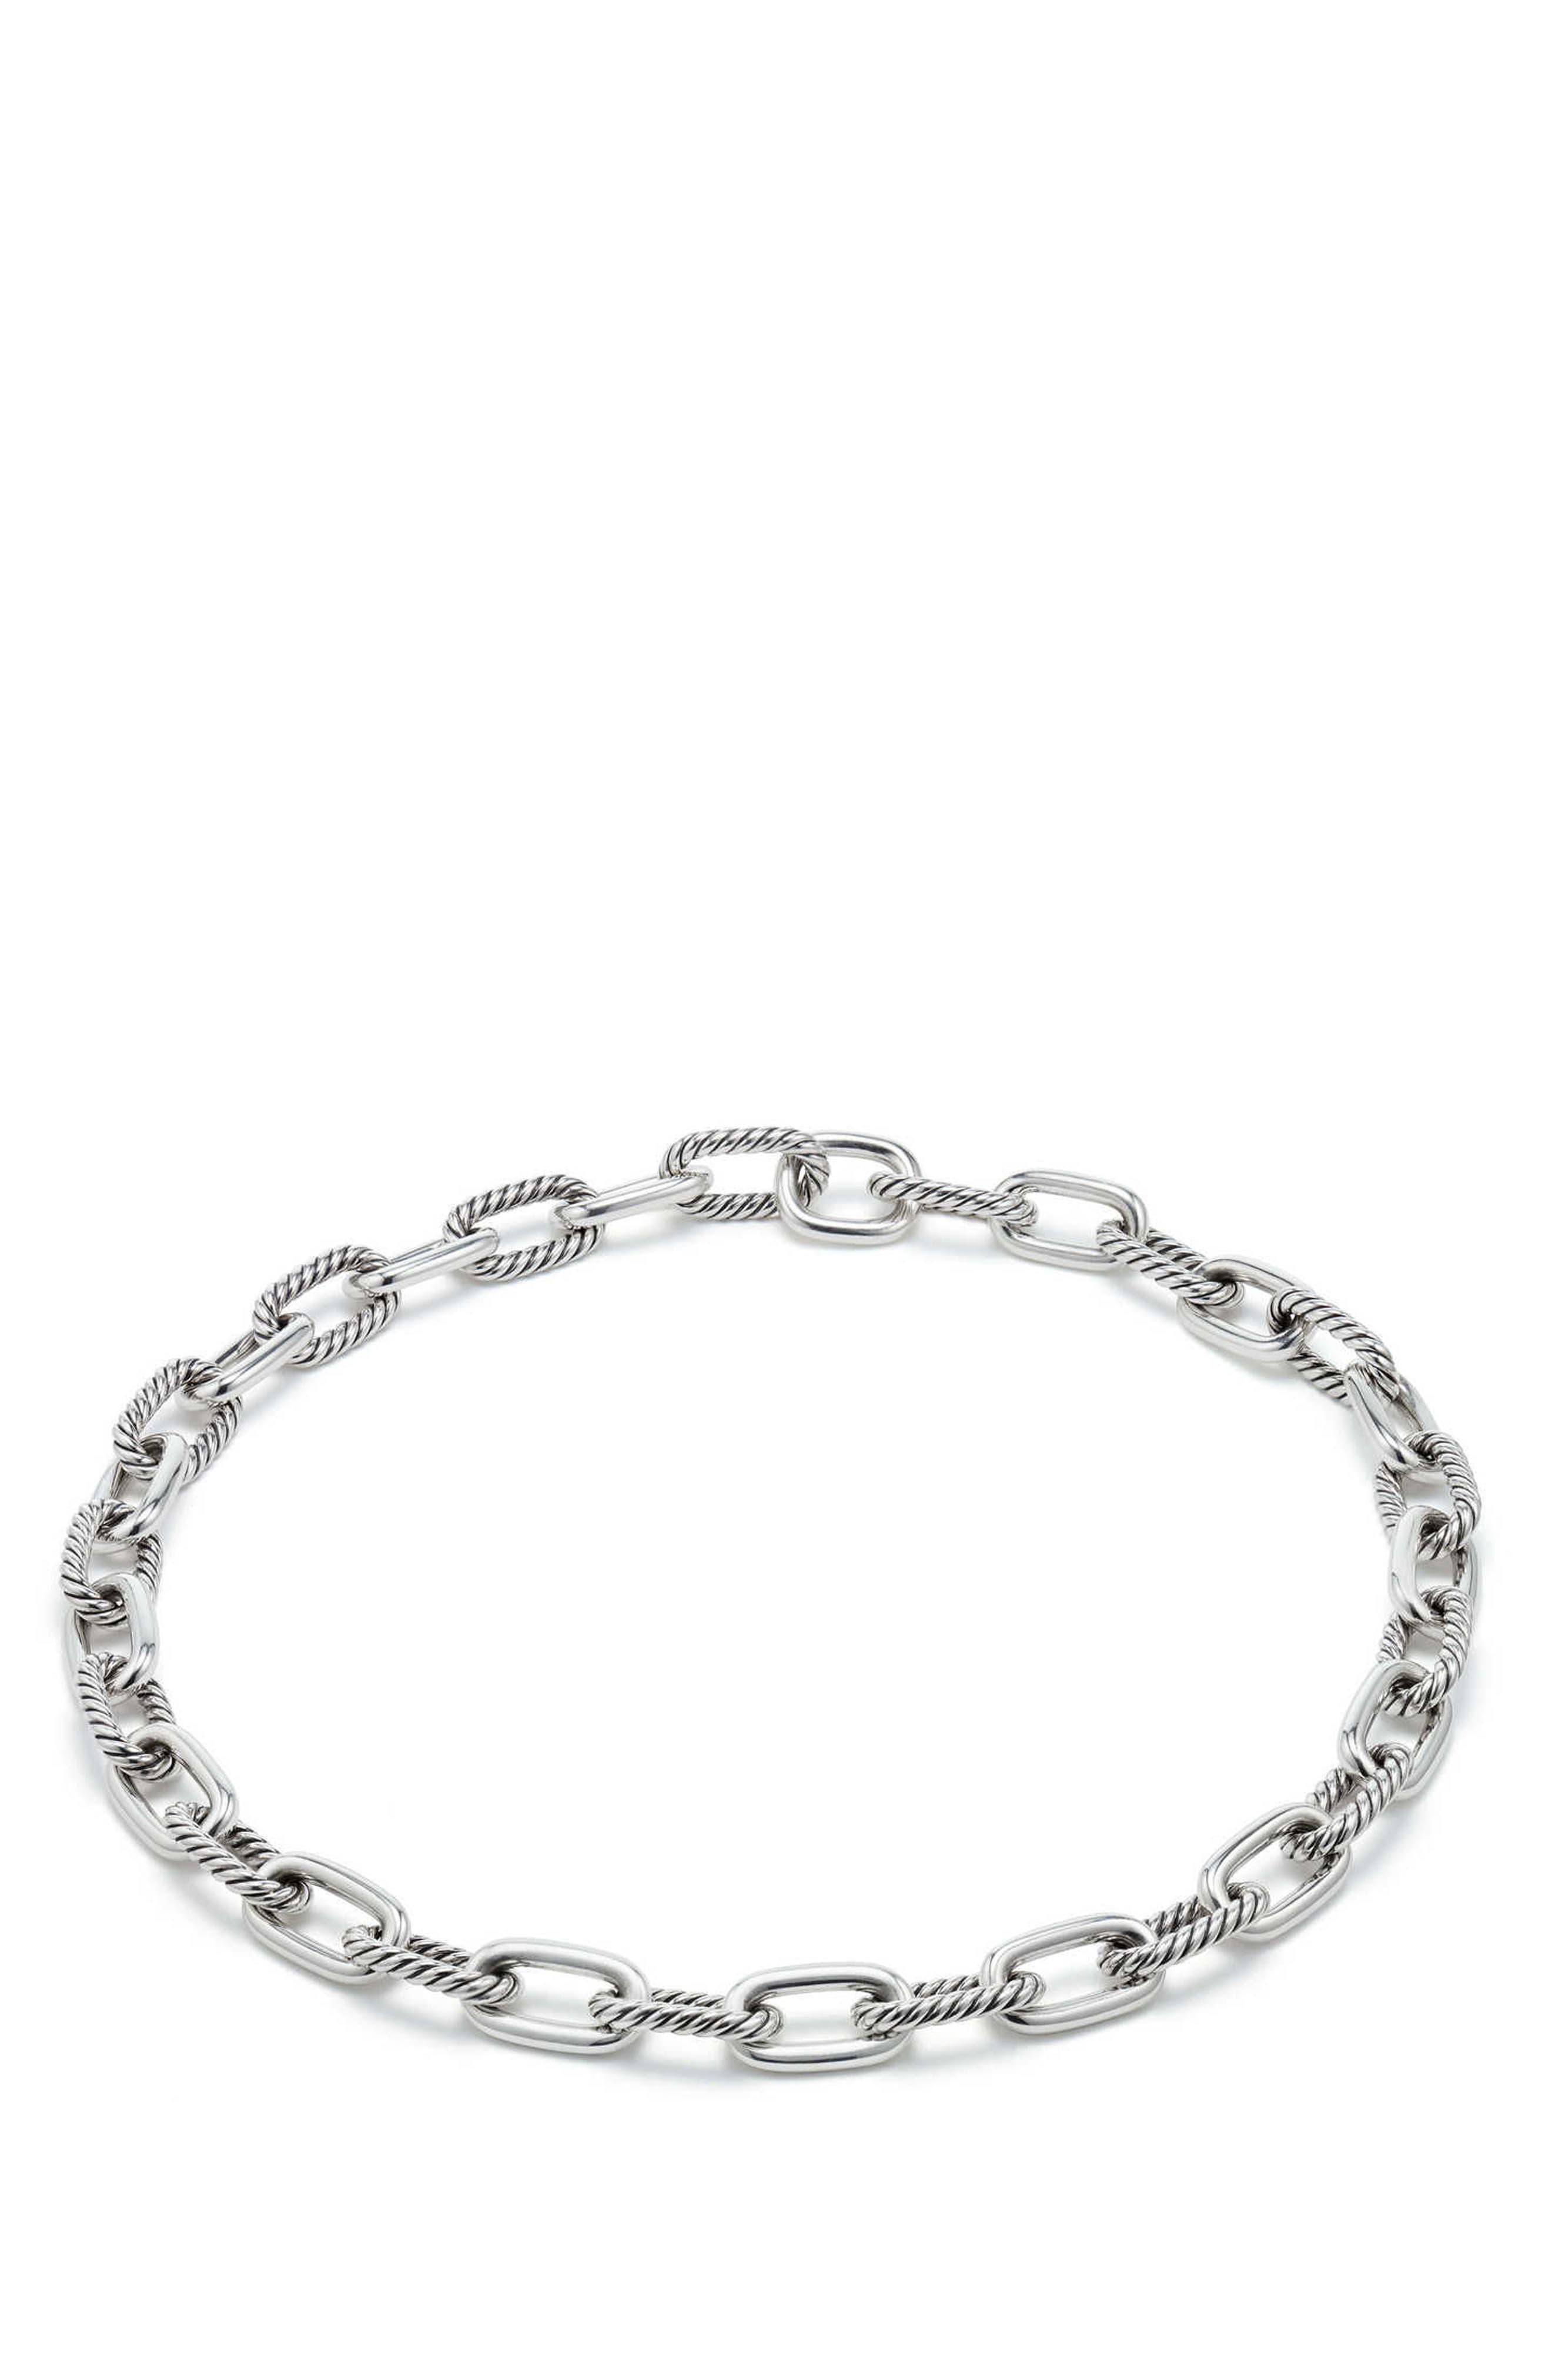 David Yurman Madison Chain Medium Necklace in Silver (Metallic) - Lyst